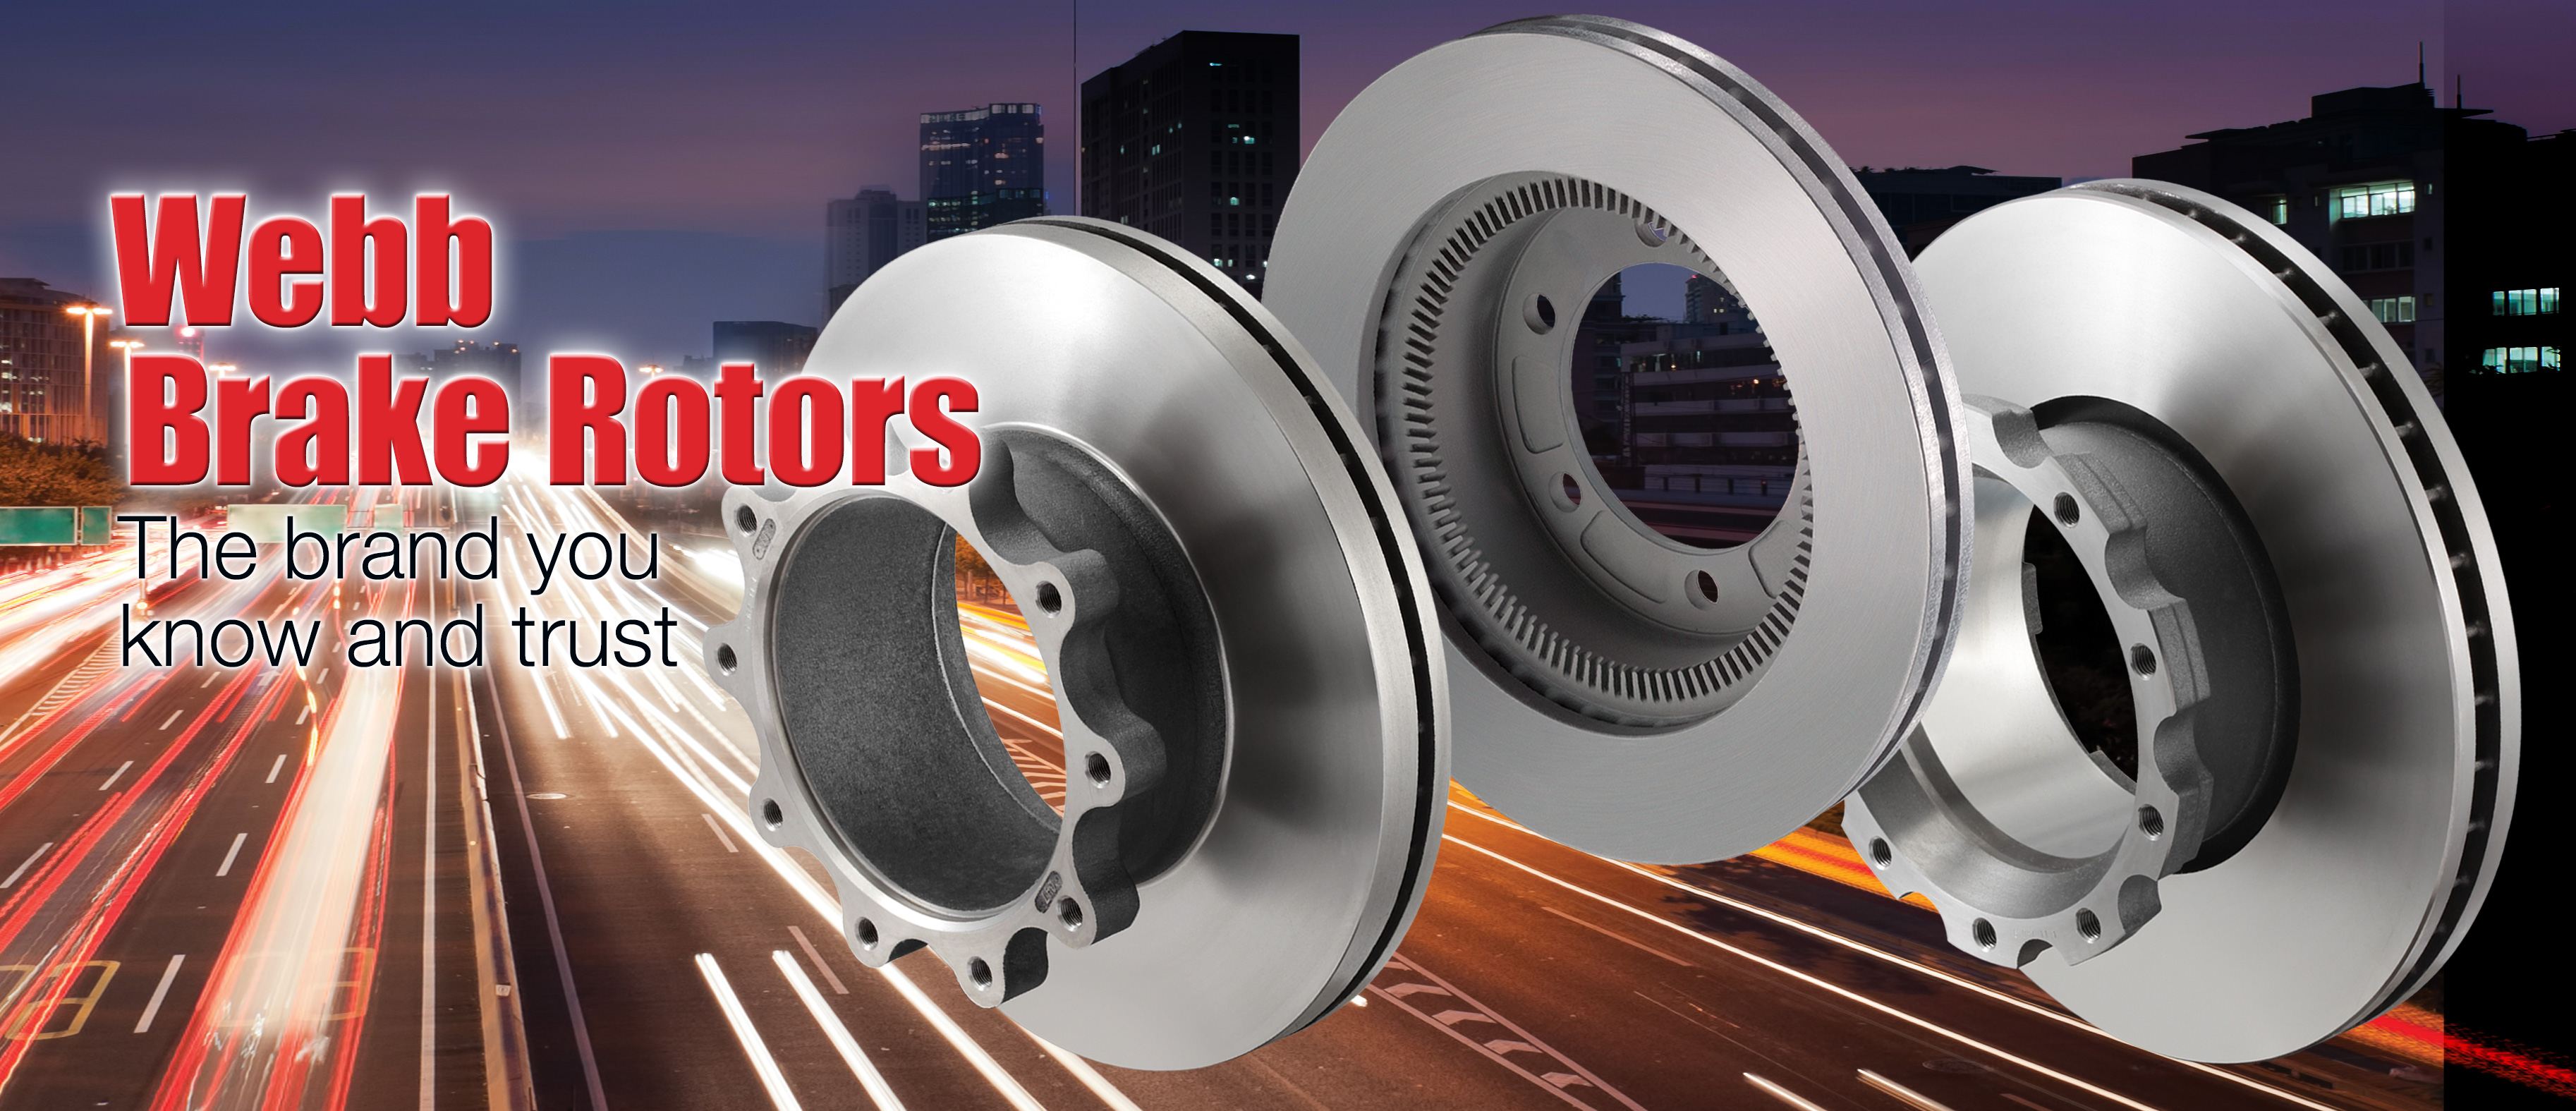 webb brake rotors